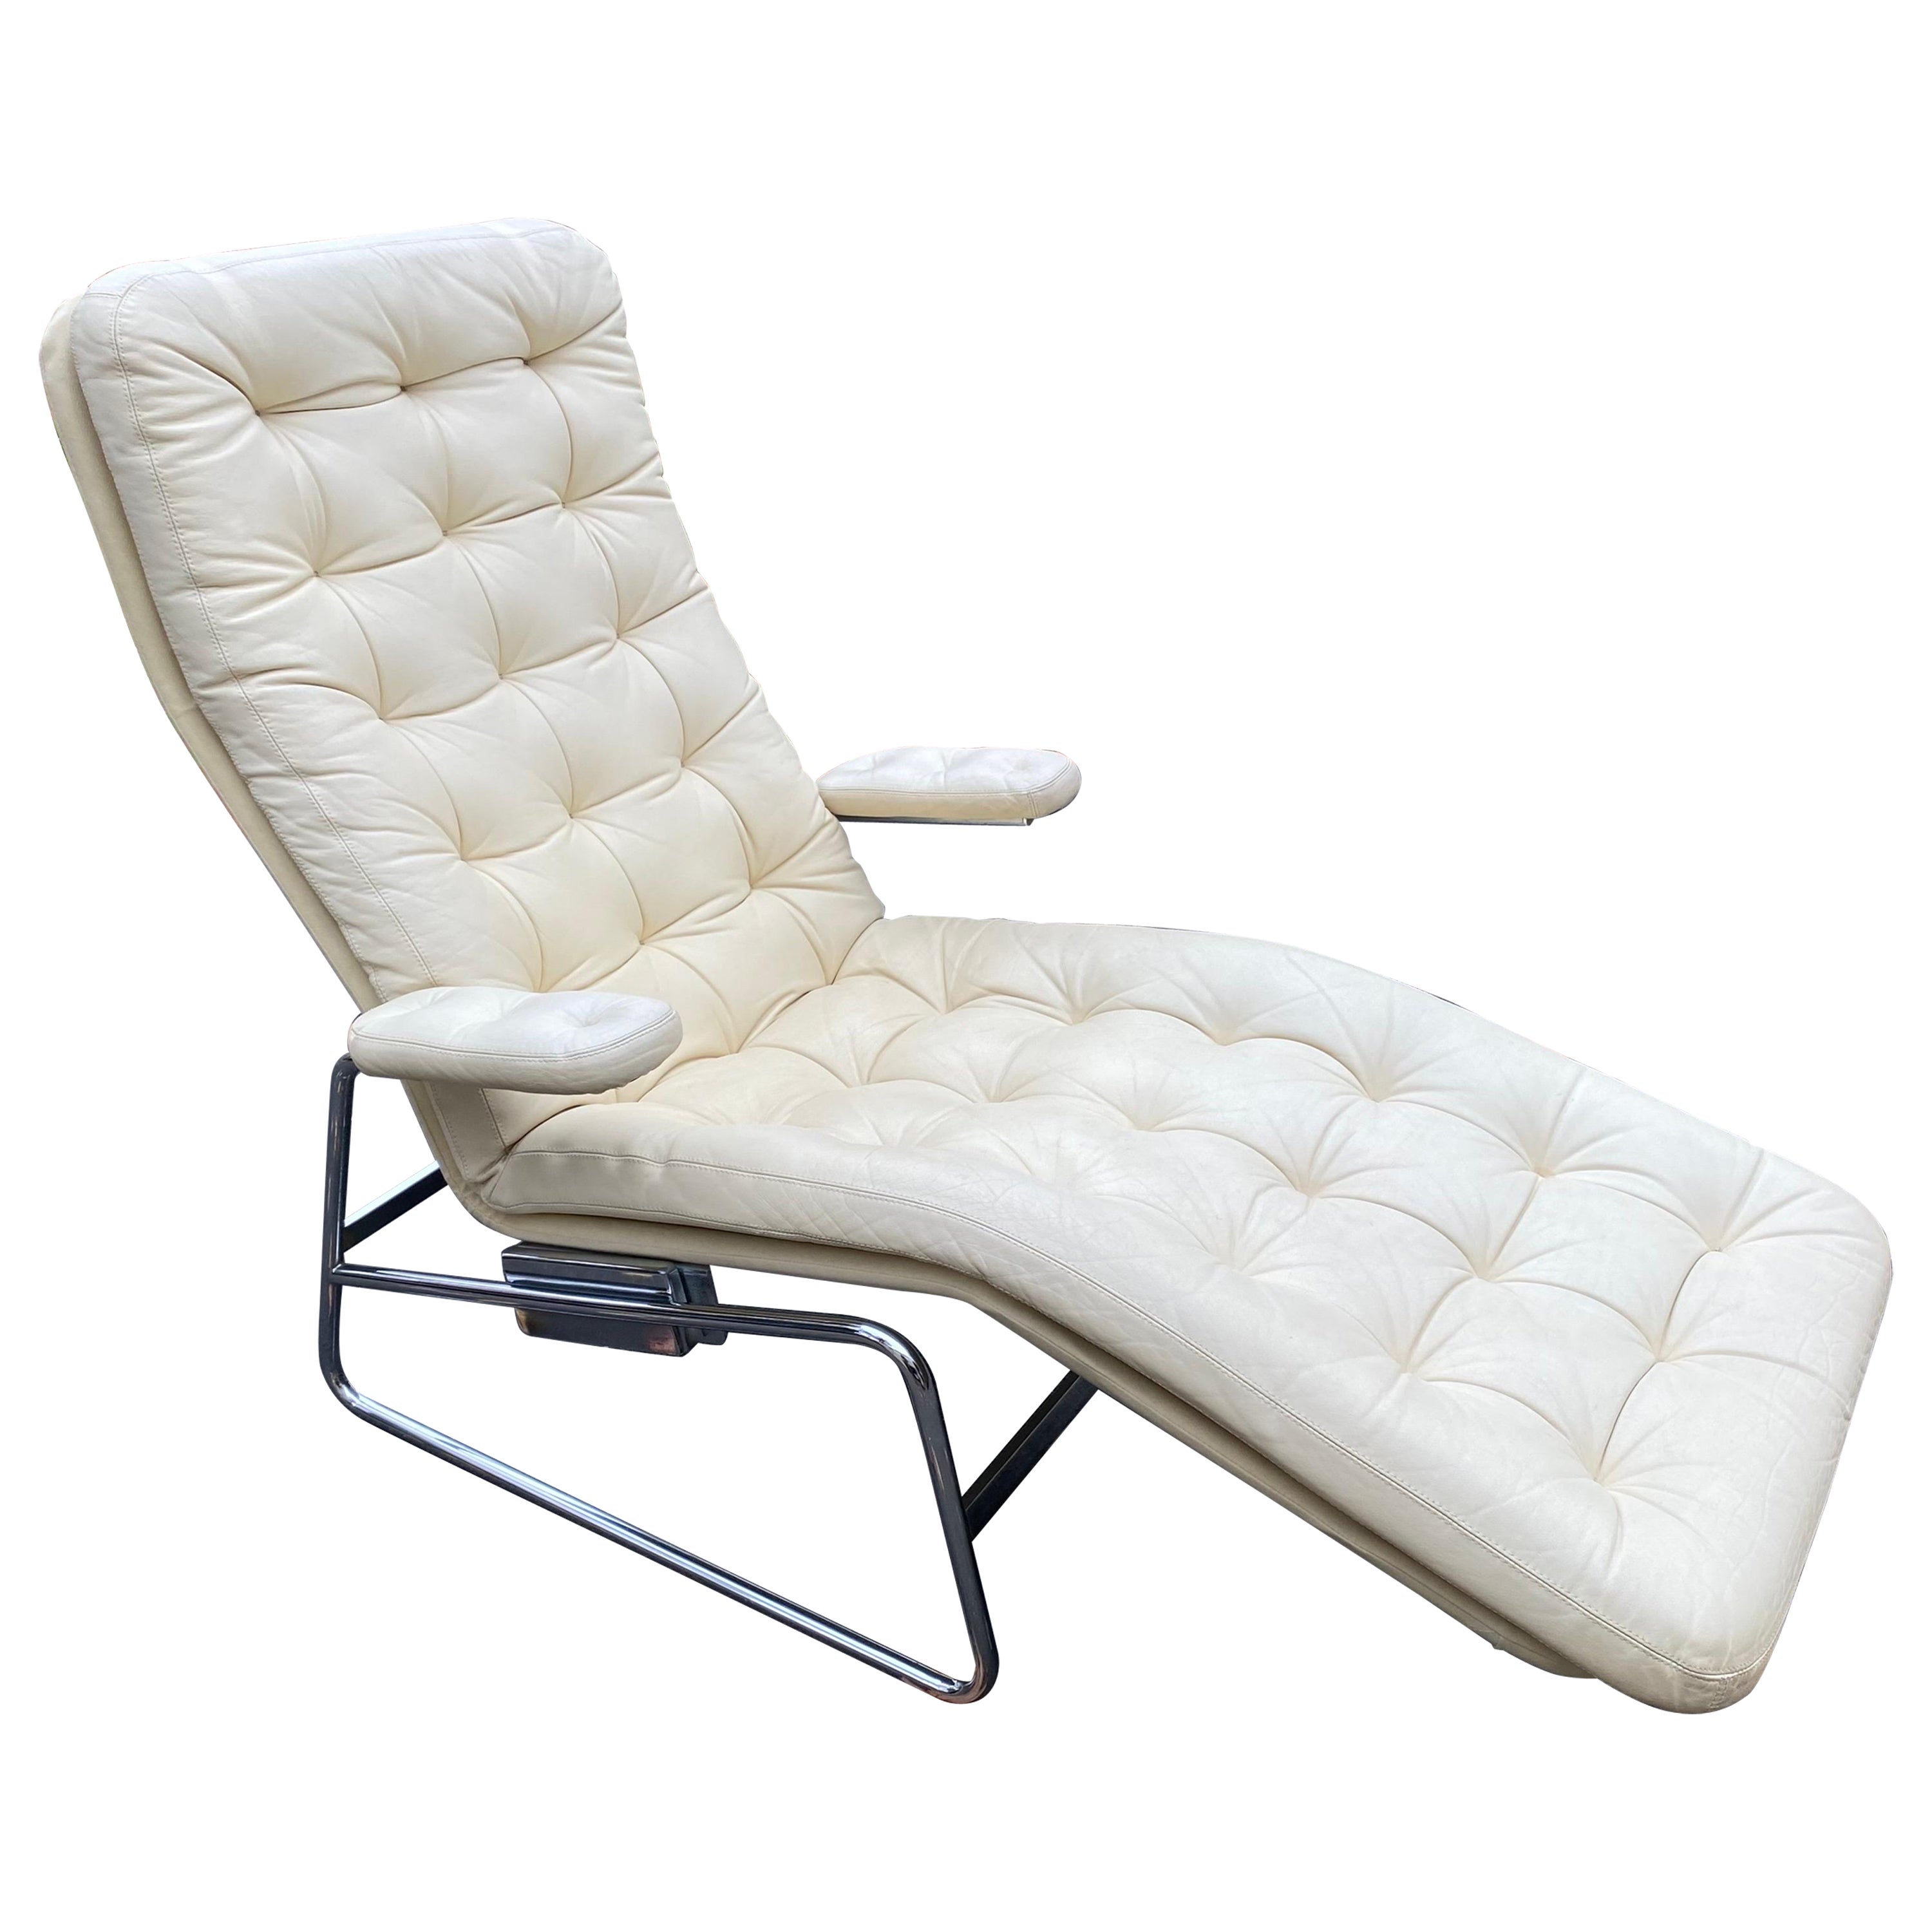 Sam Larsson "Fenix" for Dux Chaise Lounge Chair